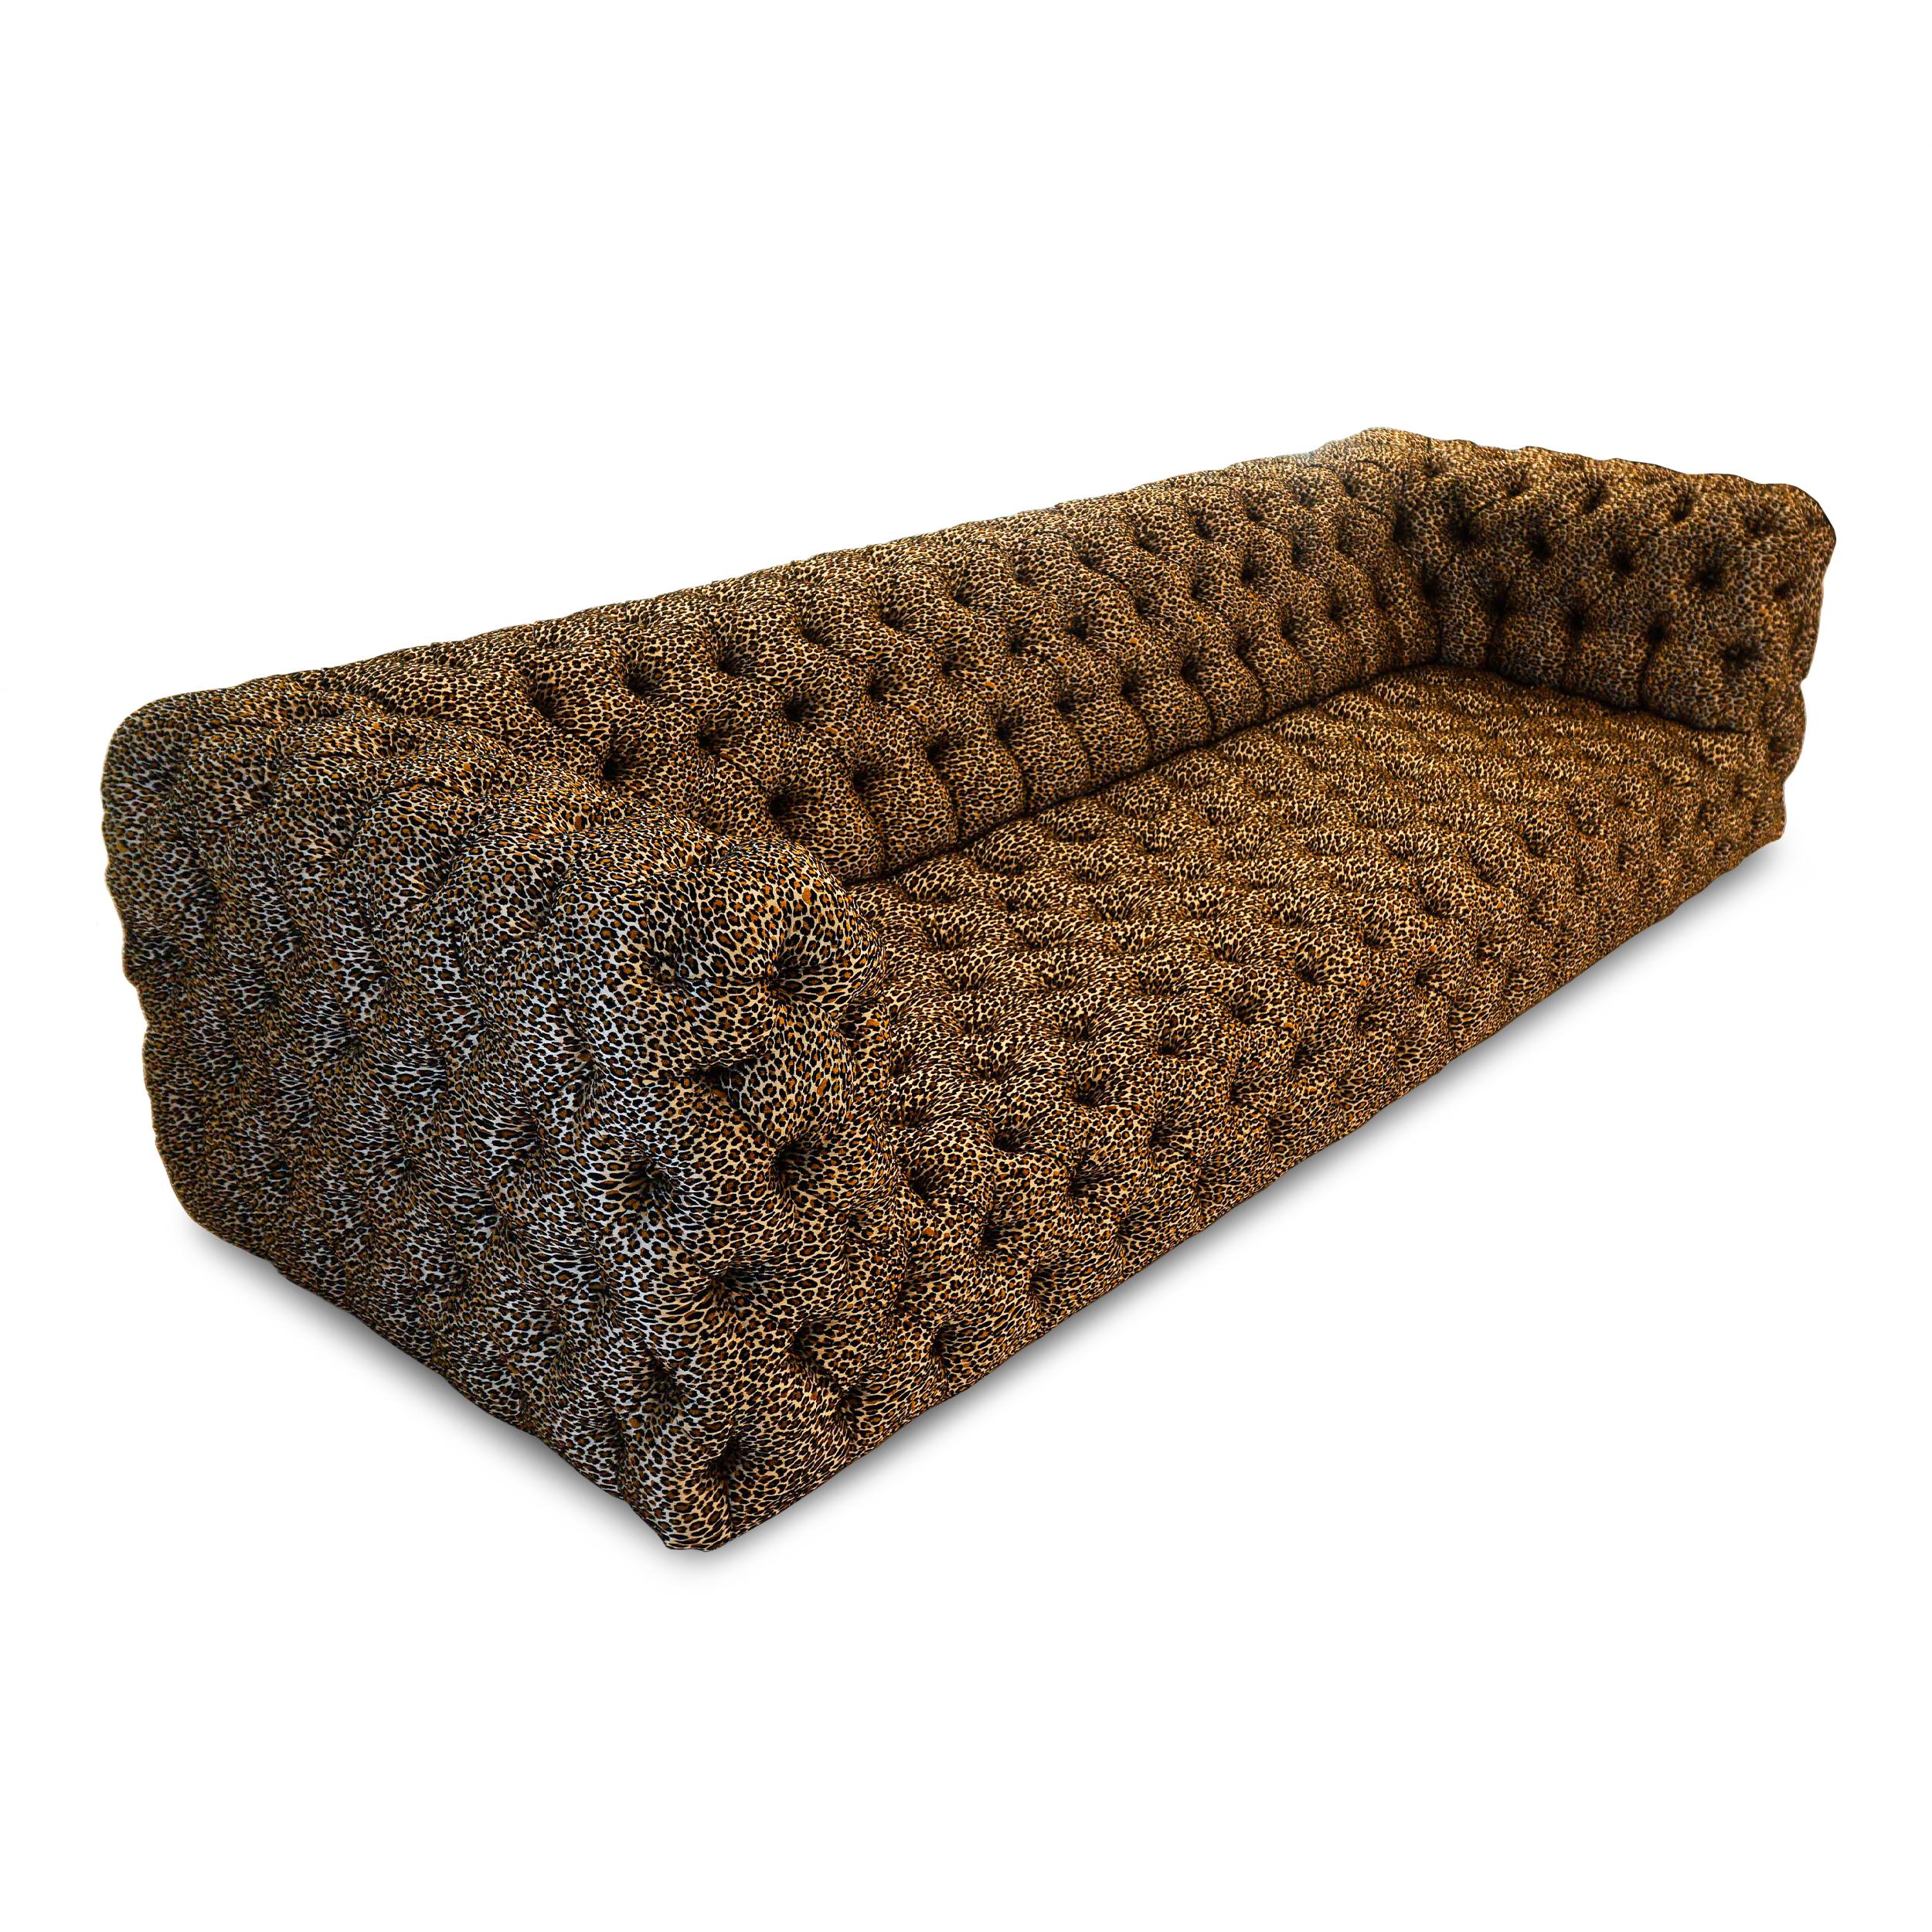 leopard print sofa for sale